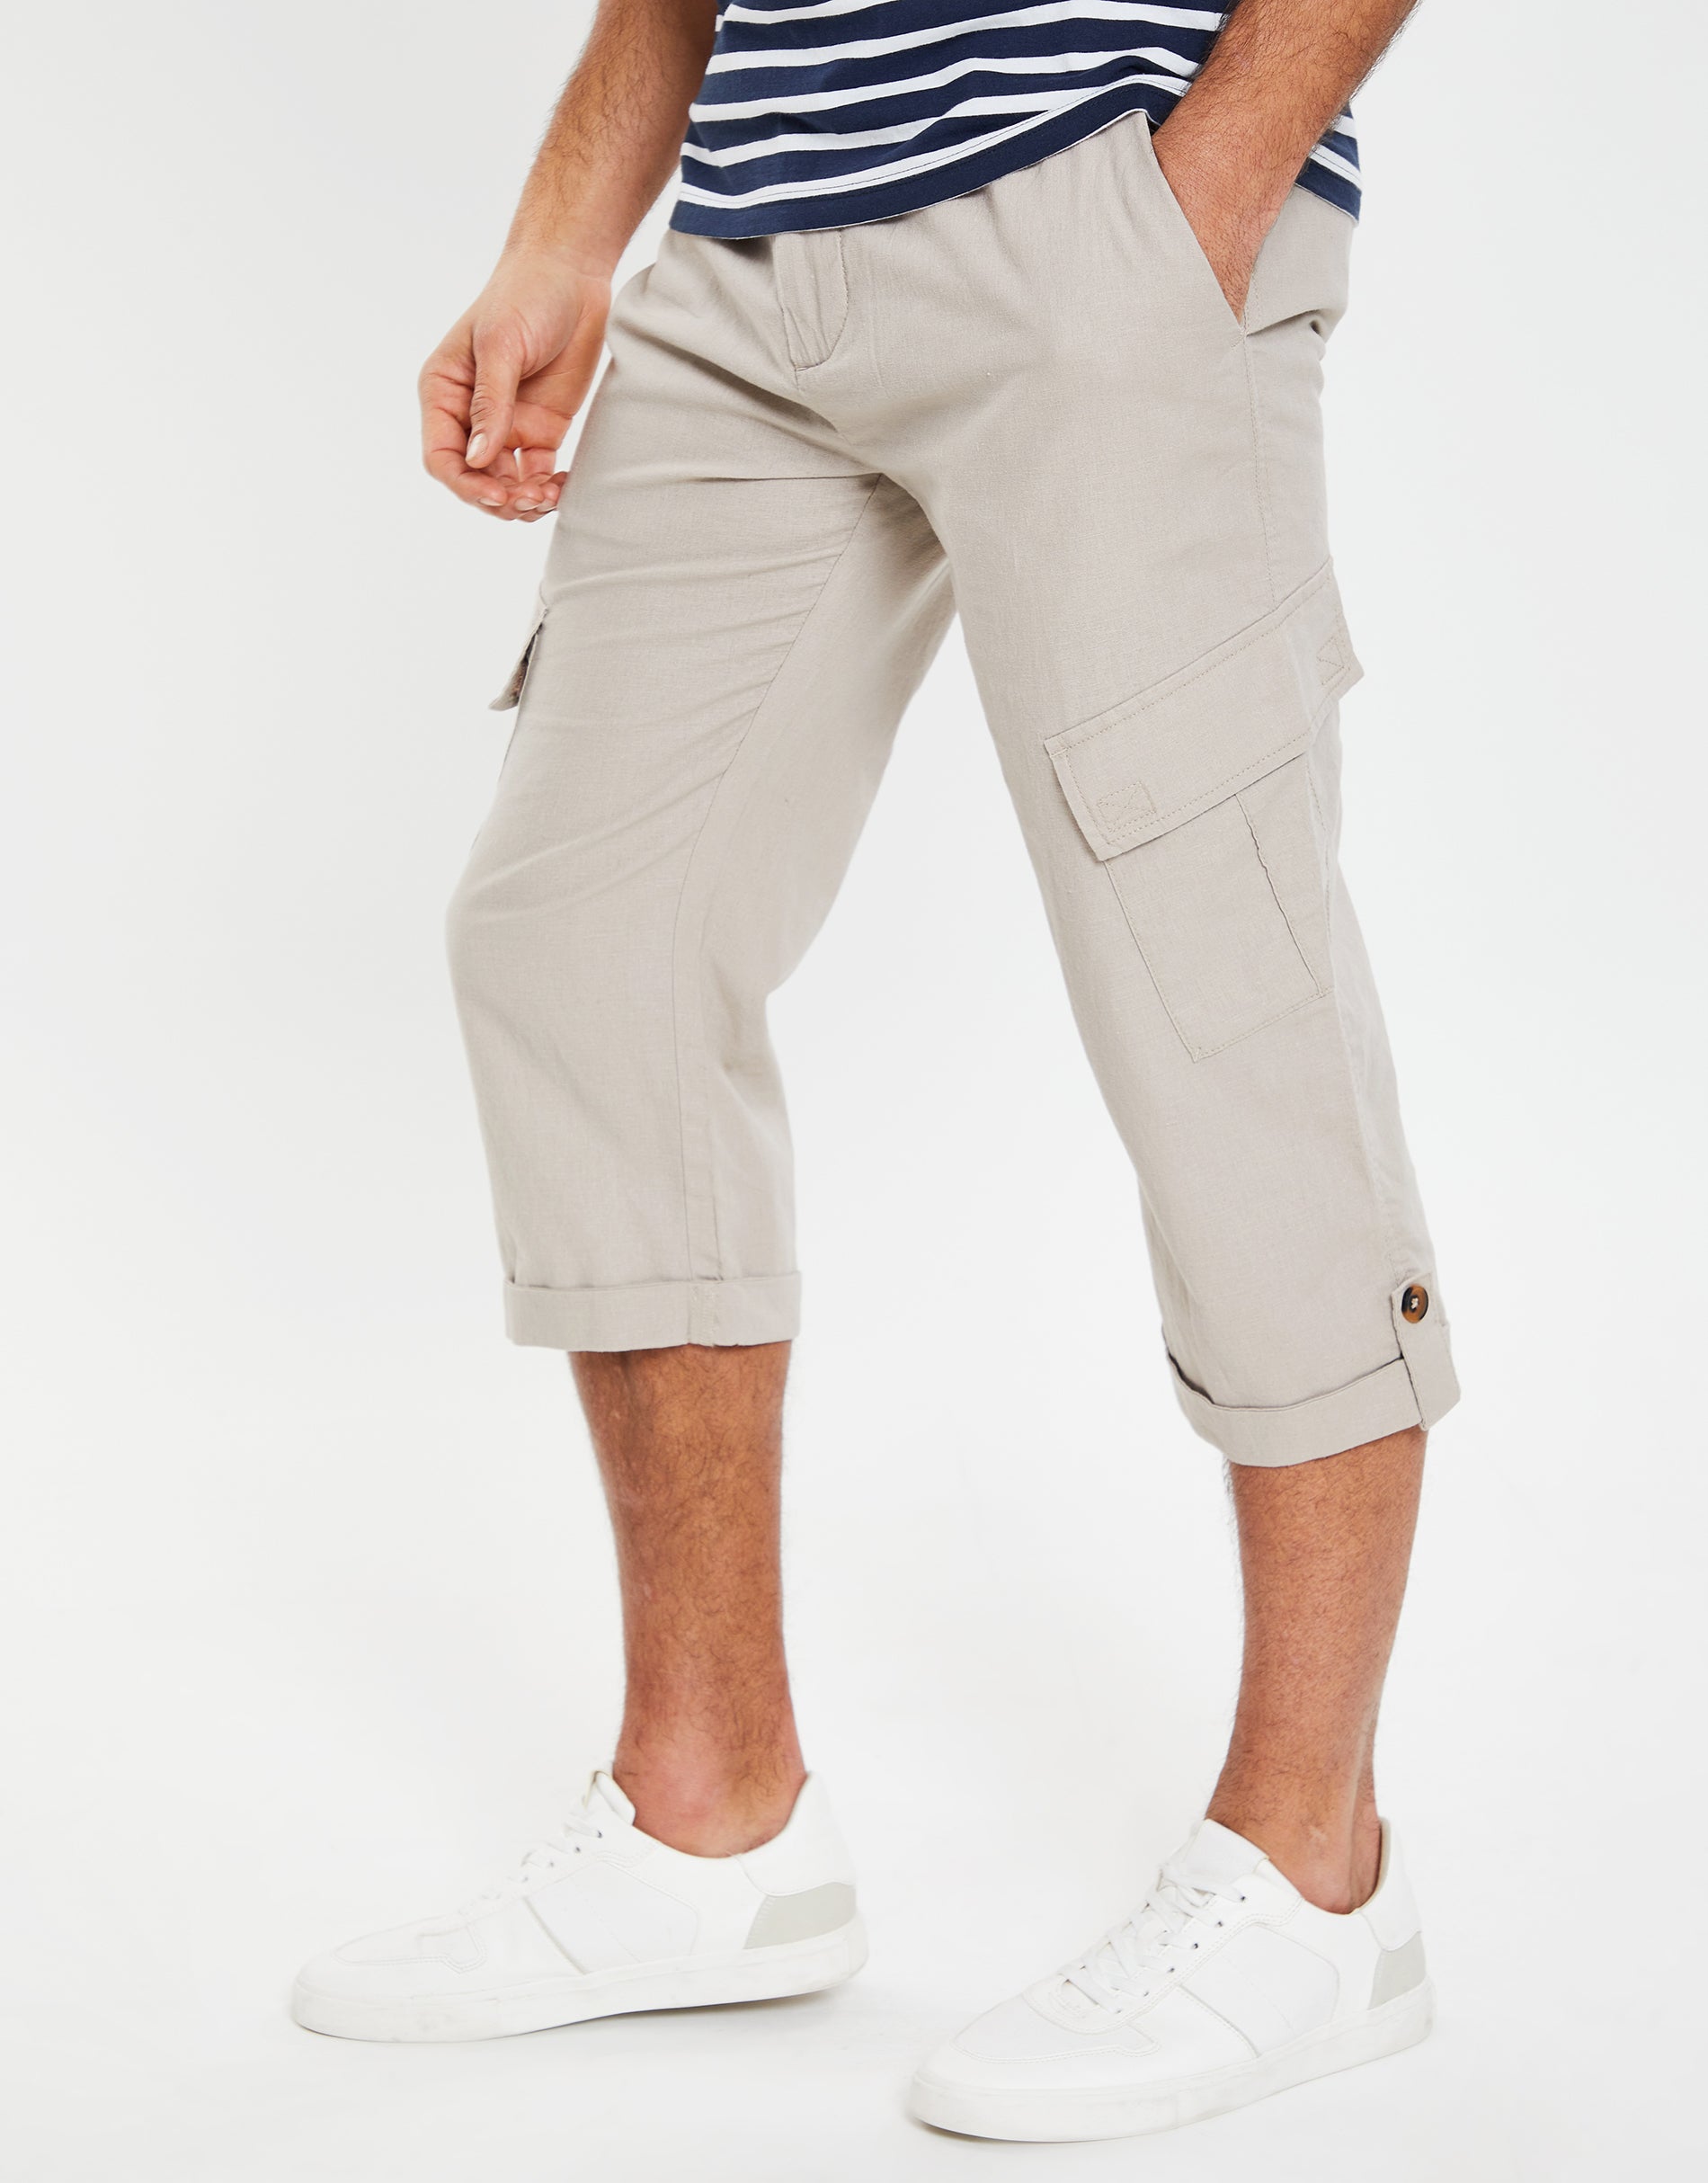 SAMACHICA Mens Linen Casual Pants Yoga Beach Shorts Lightweight Cotton  Sweatpants Loose 34 Trousers Elastic Waist Blue XL price in UAE  Amazon  UAE  kanbkam